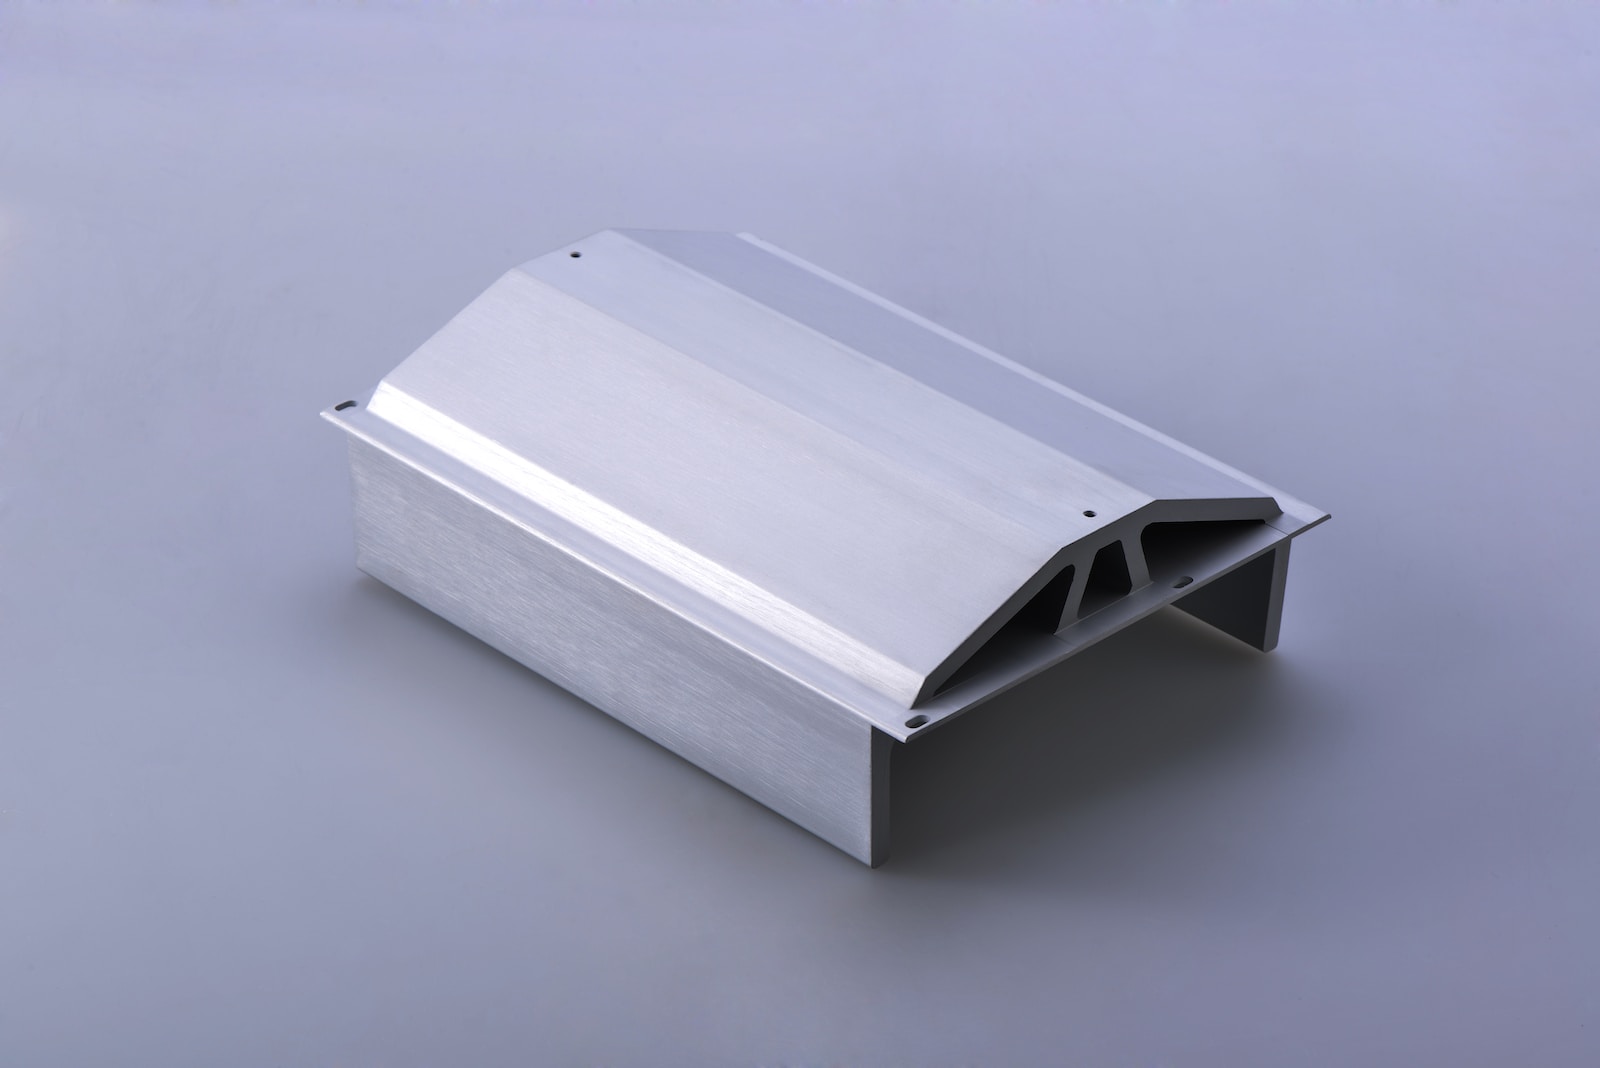 Aluminum Extrusion white rectangular box on white surface